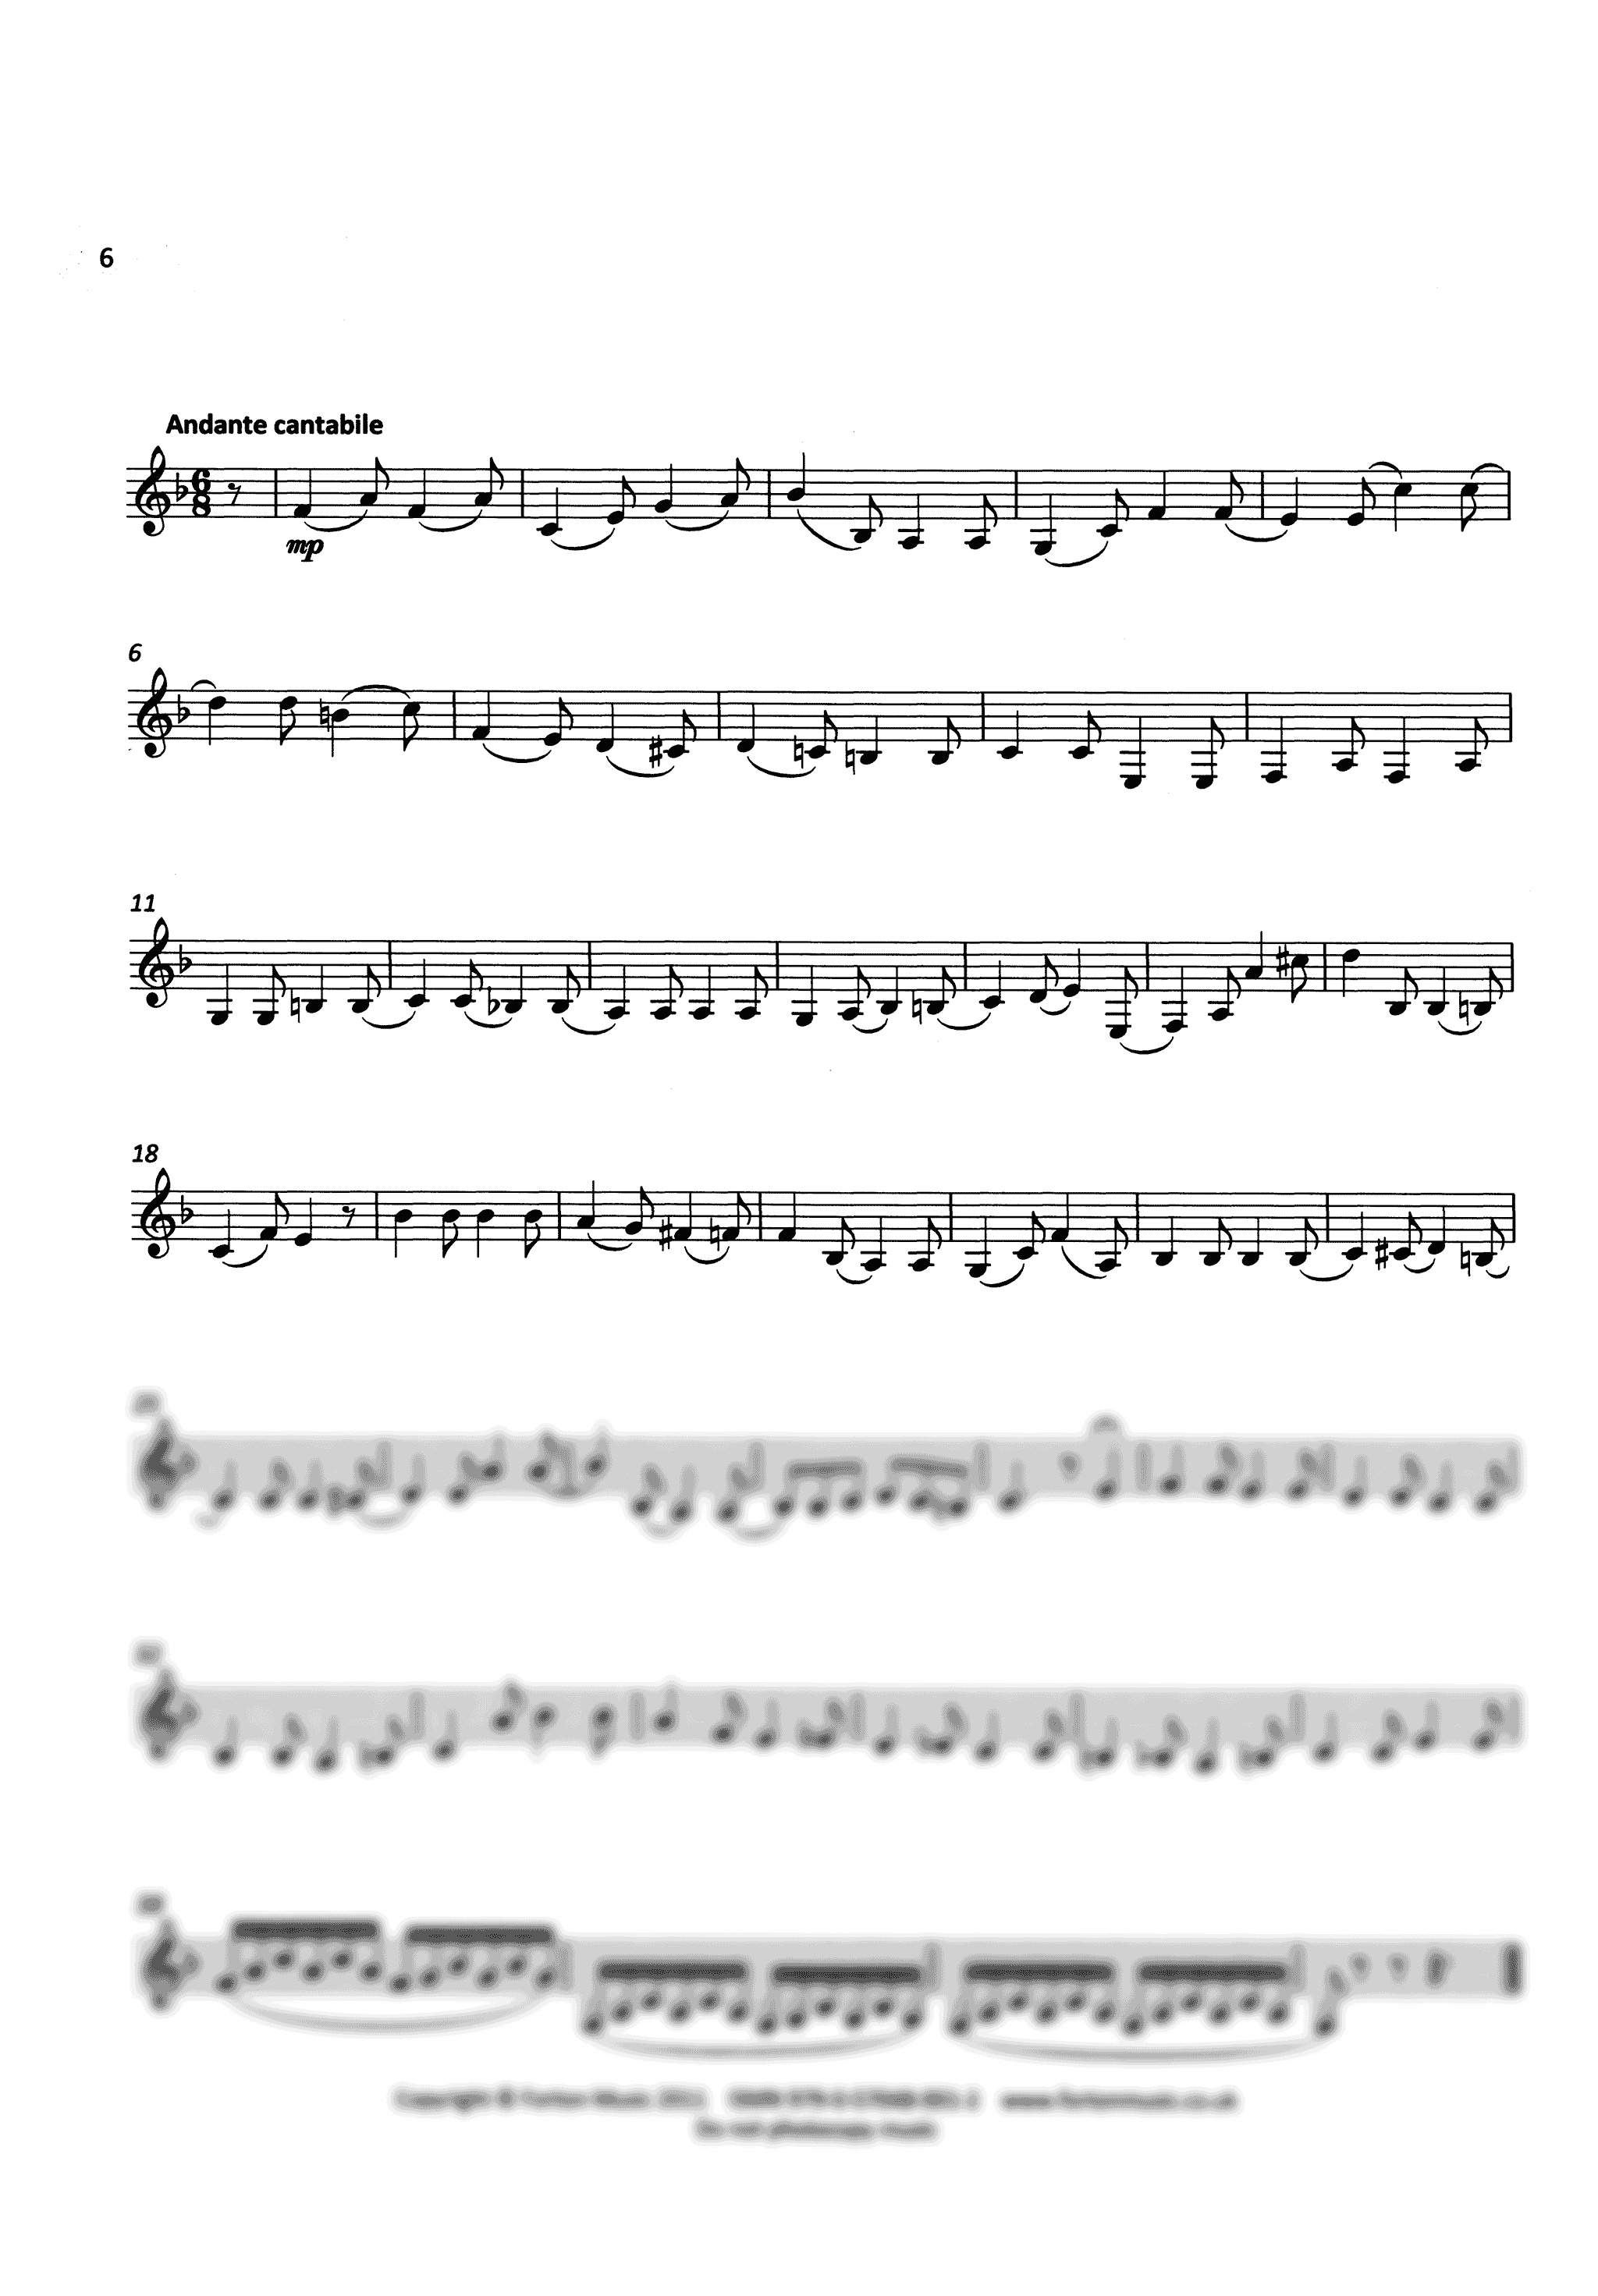 Mozart Duo No. 2, K. 424 flute and clarinet arrangement clarinet part movement 2